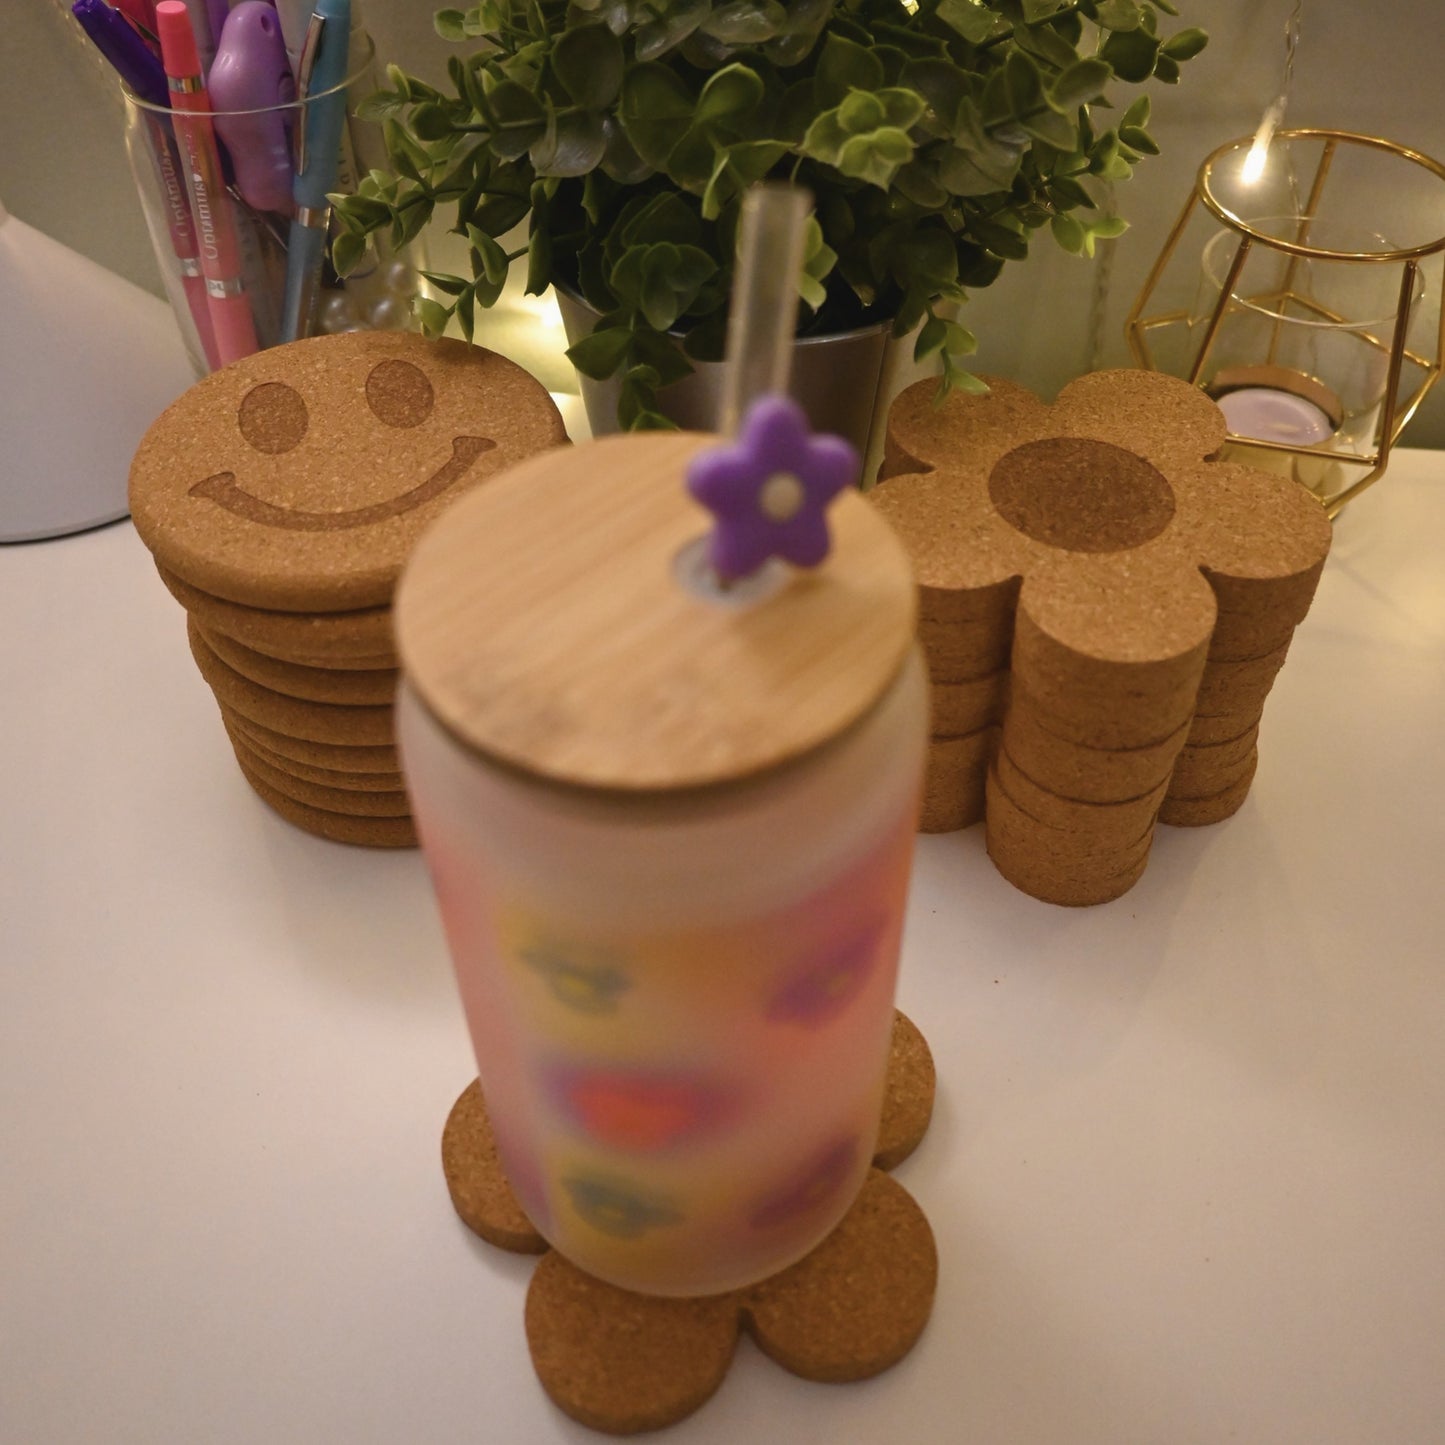 NEW/RESTOCK!!! Cork Drink Coasters - Smiley Face Coaster, Flower Coaster